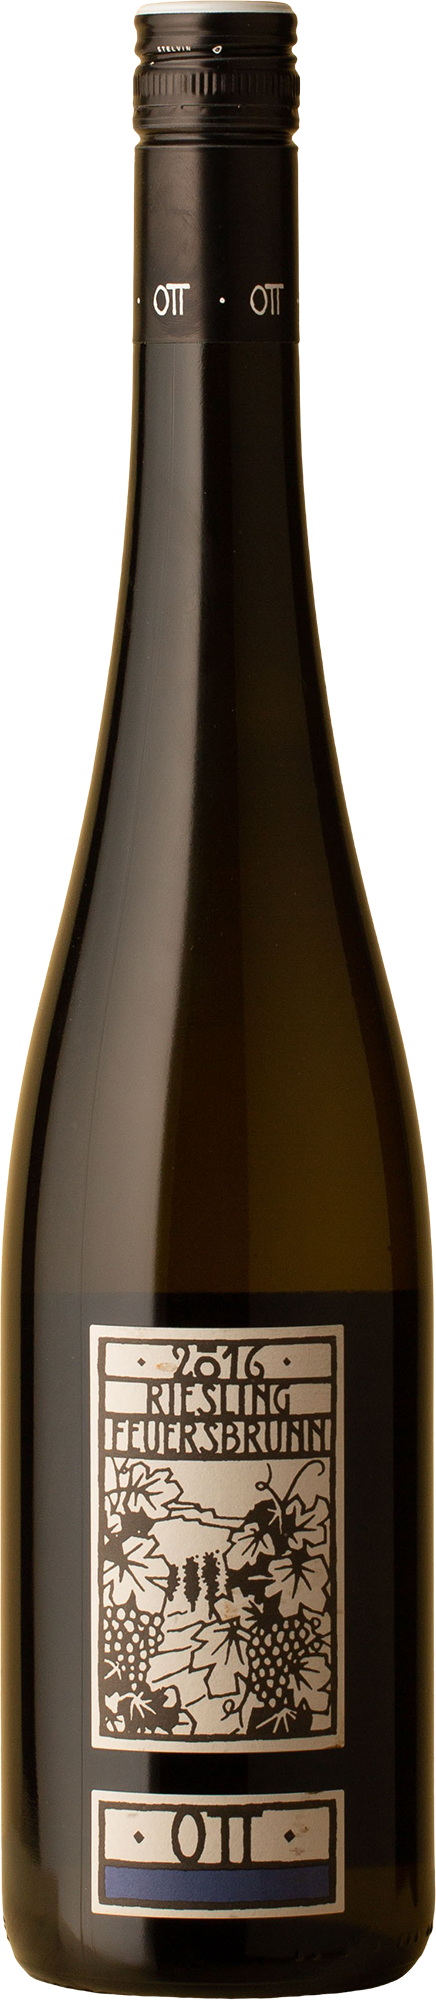 Bernhard Ott - Feuersbrunn Riesling 2016 White Wine